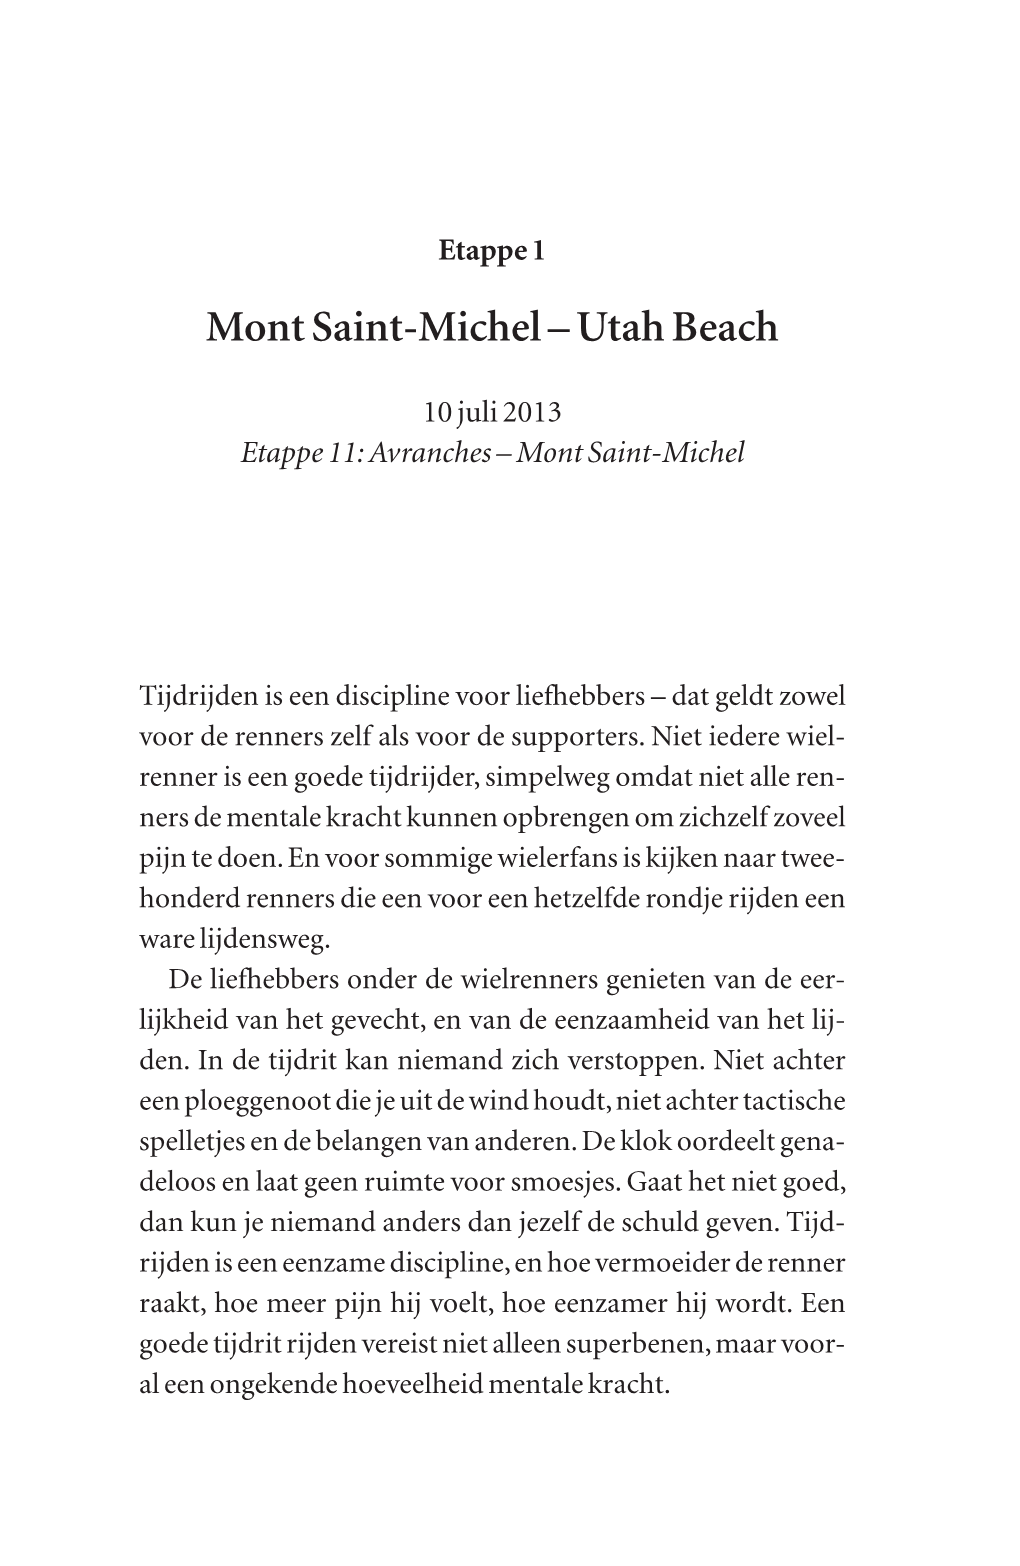 Mont Saint-Michel – Utah Beach